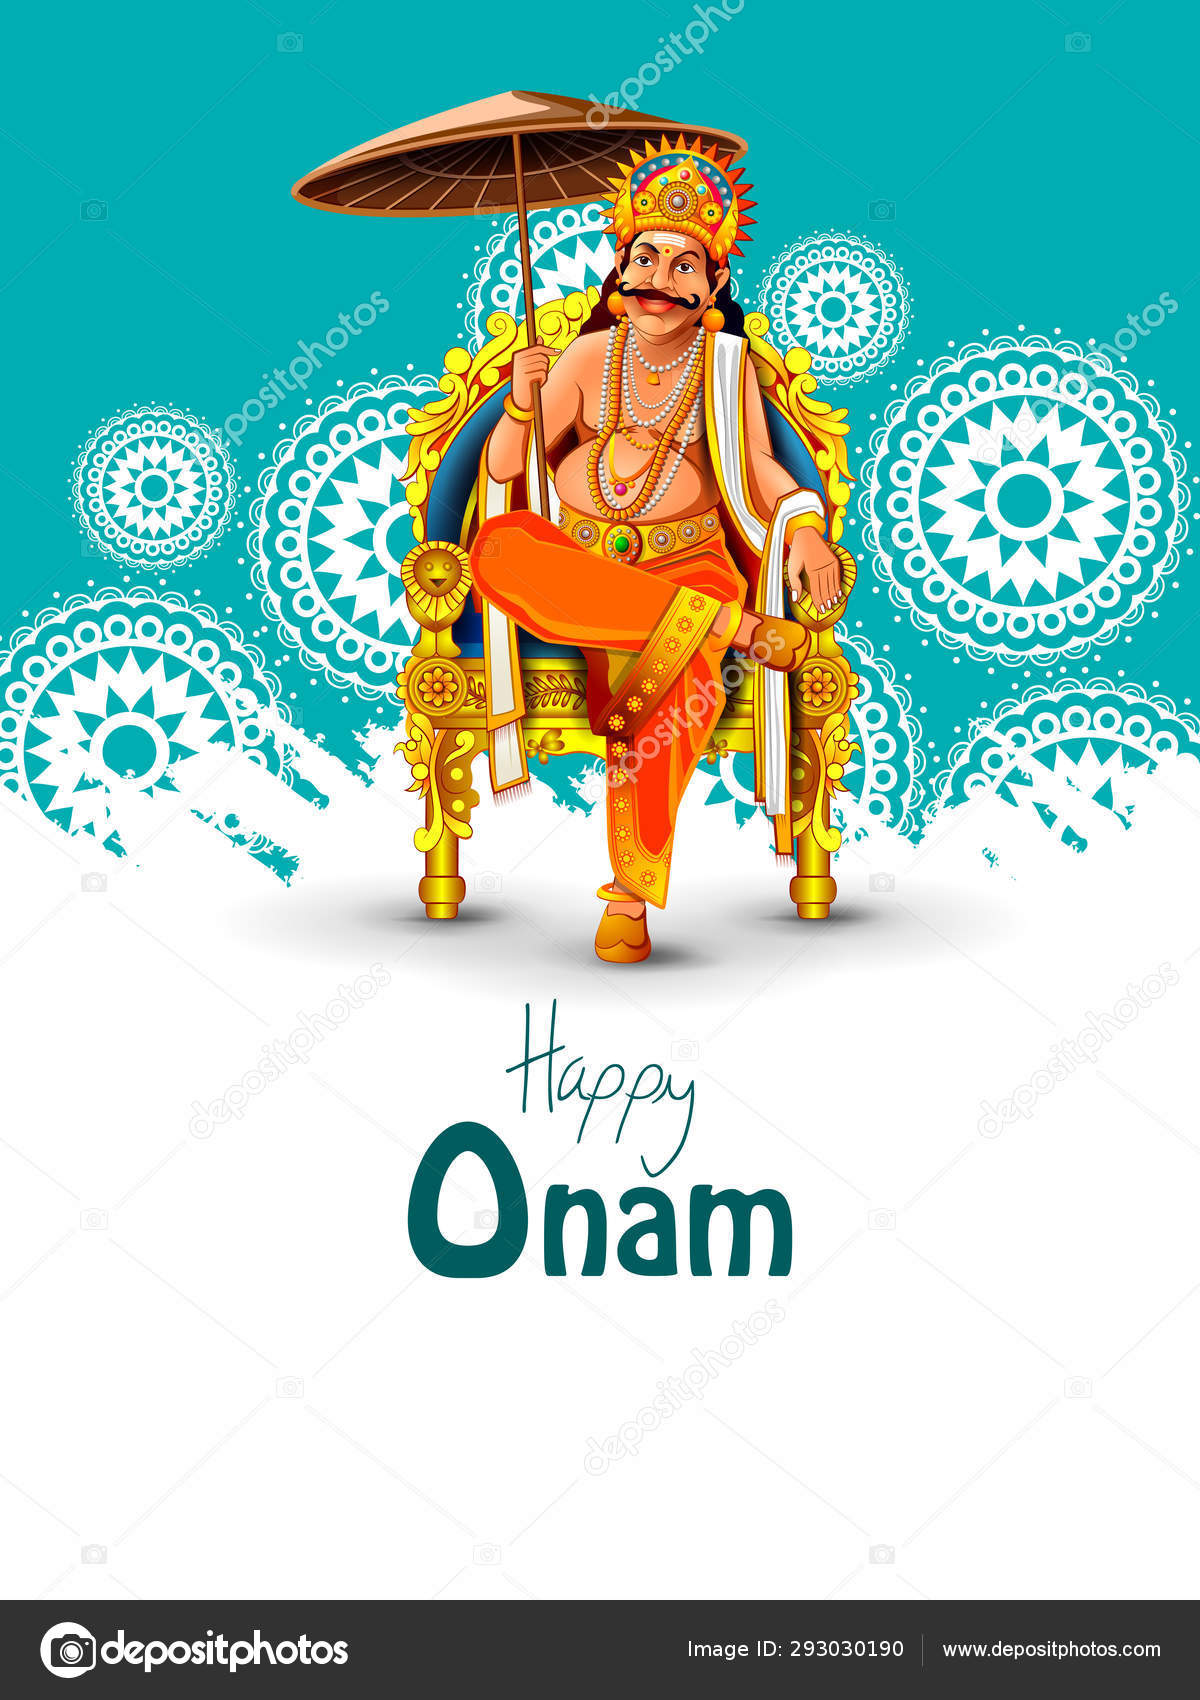 Happy onam wallpaper background Vector Art Stock Images | Depositphotos